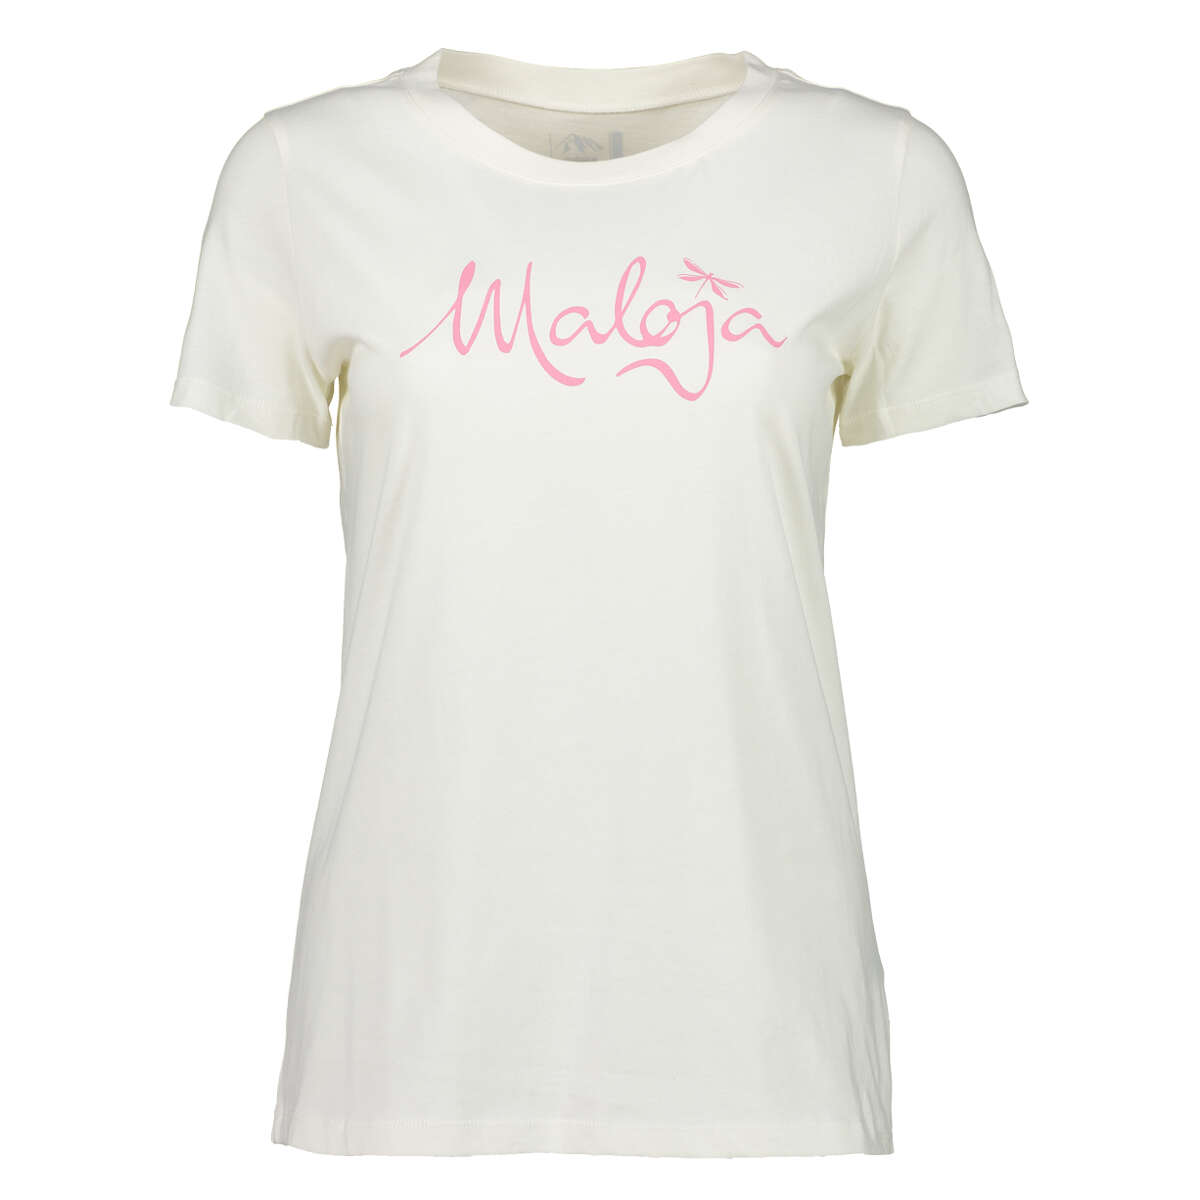 Maloja Girls T-Shirt SandraM. Vintage White